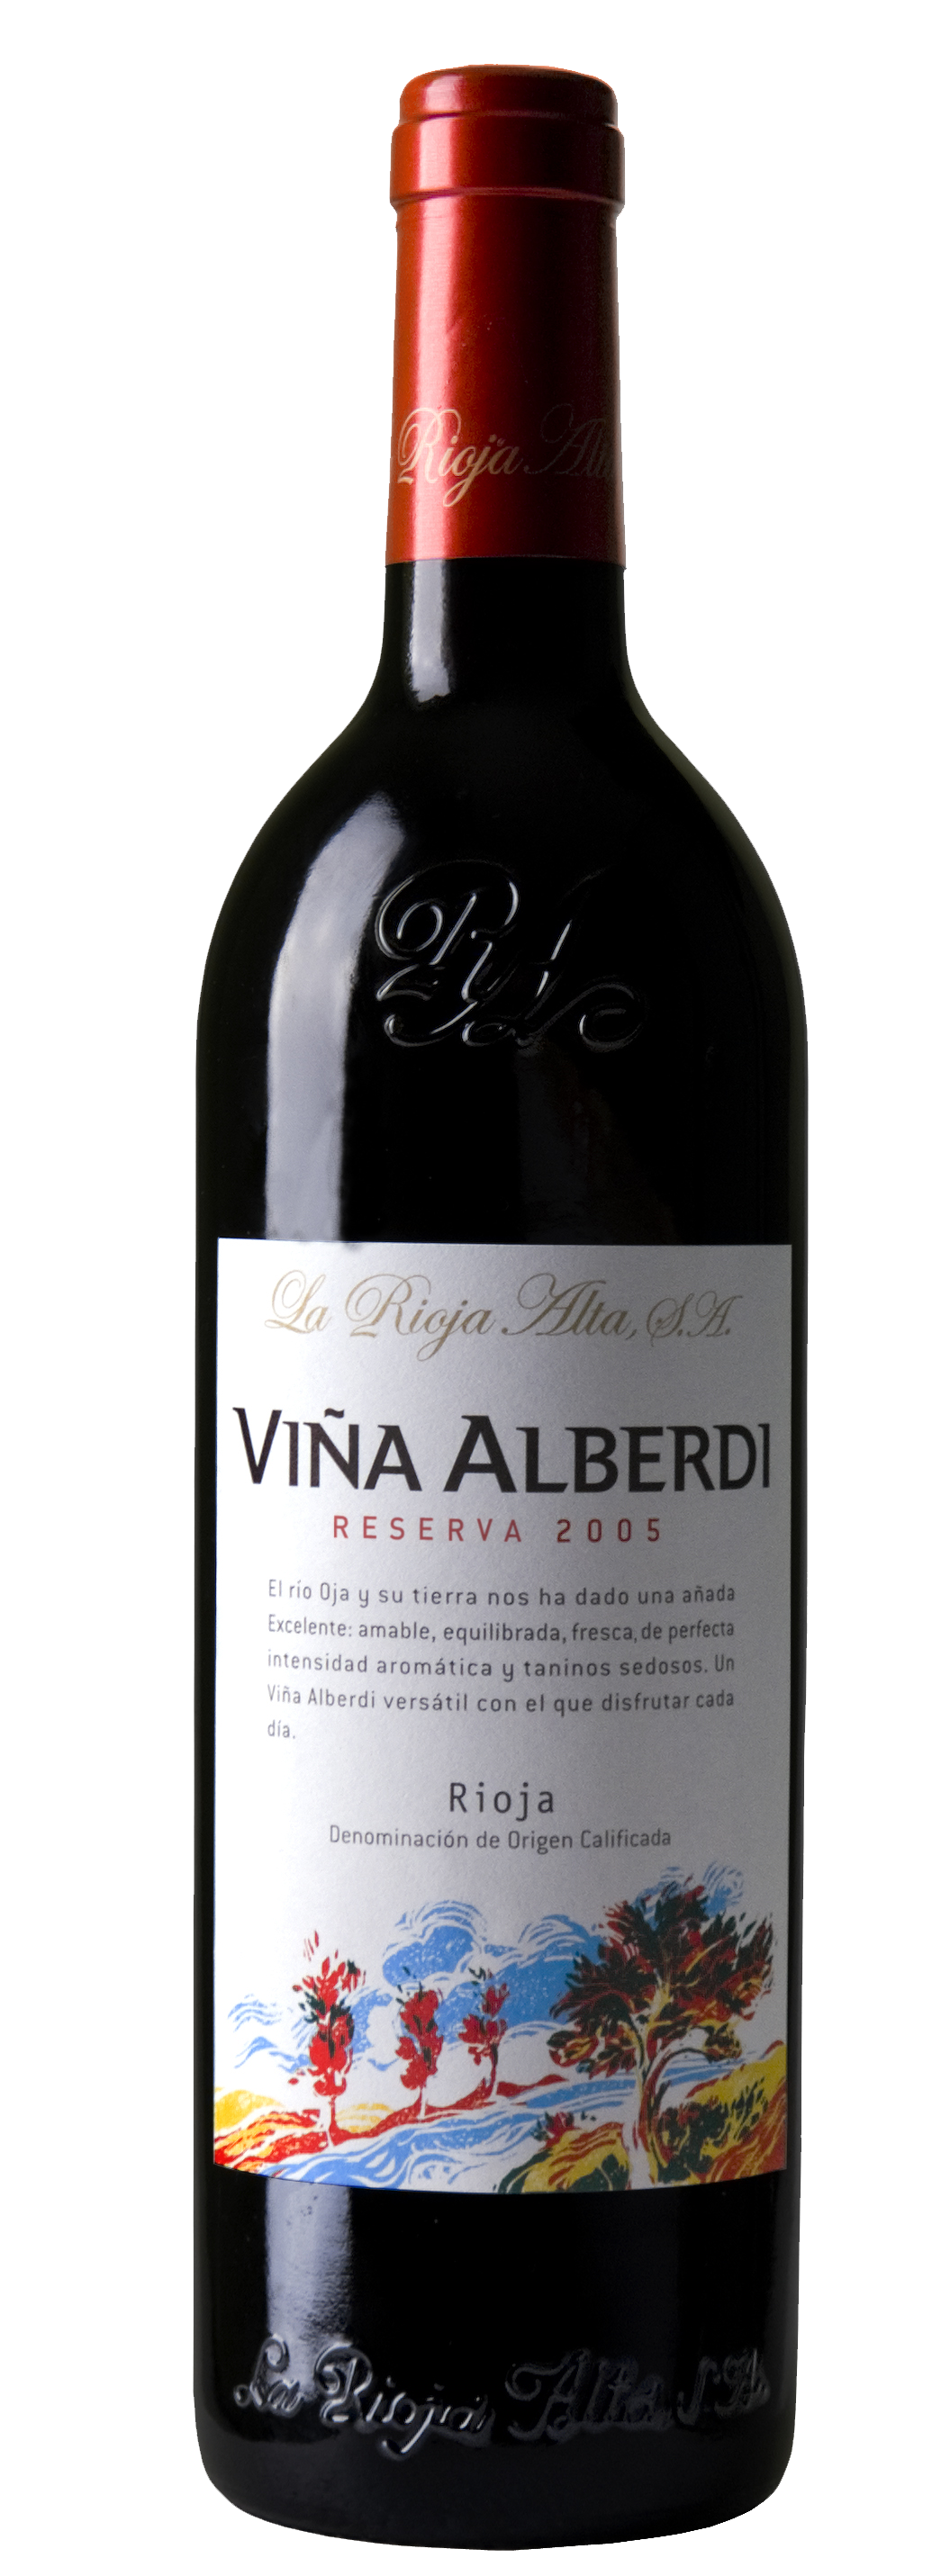 Bottle shot of 2011 Viña Alberdi Reserva